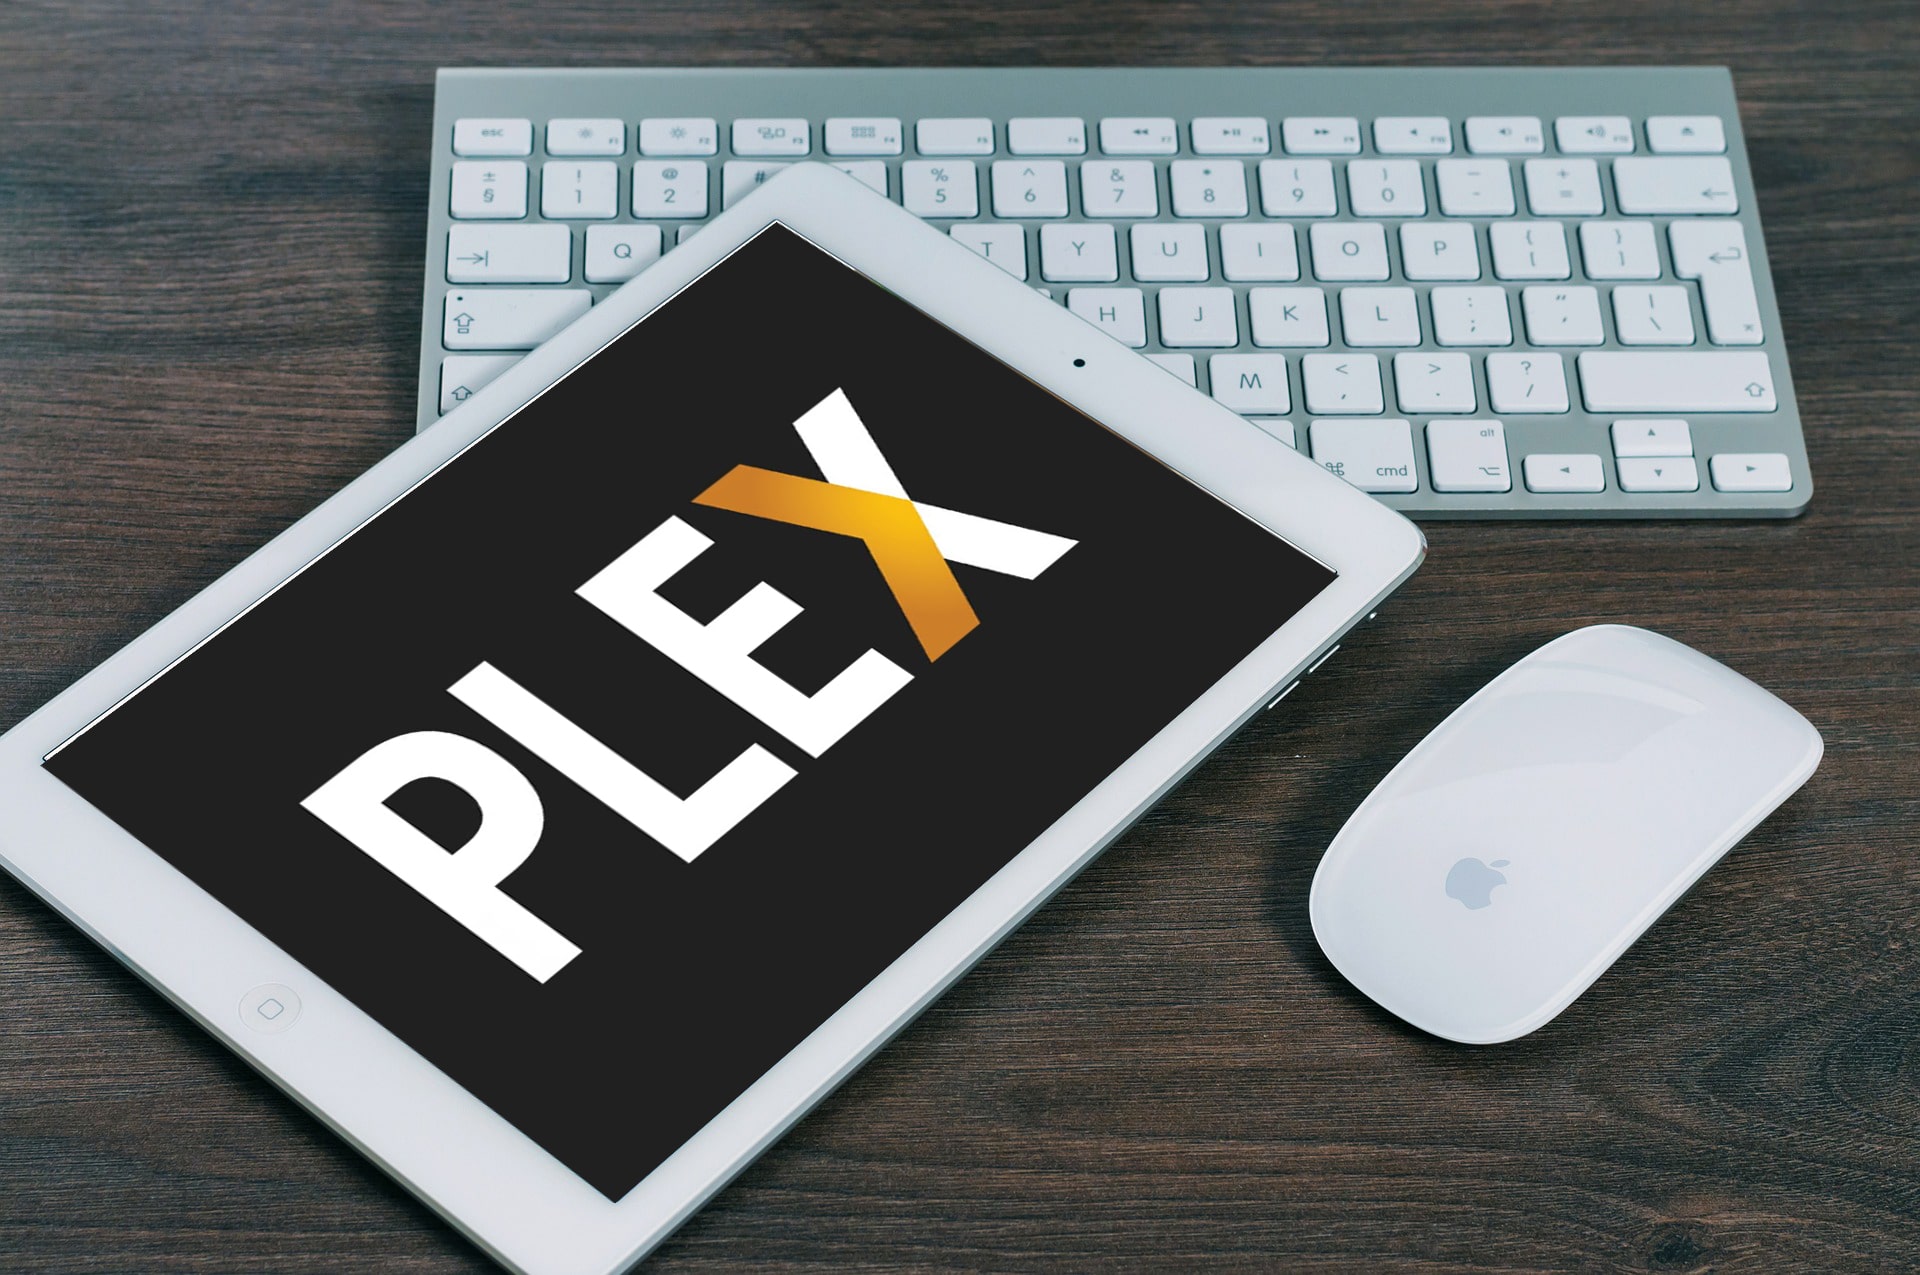 plex media server